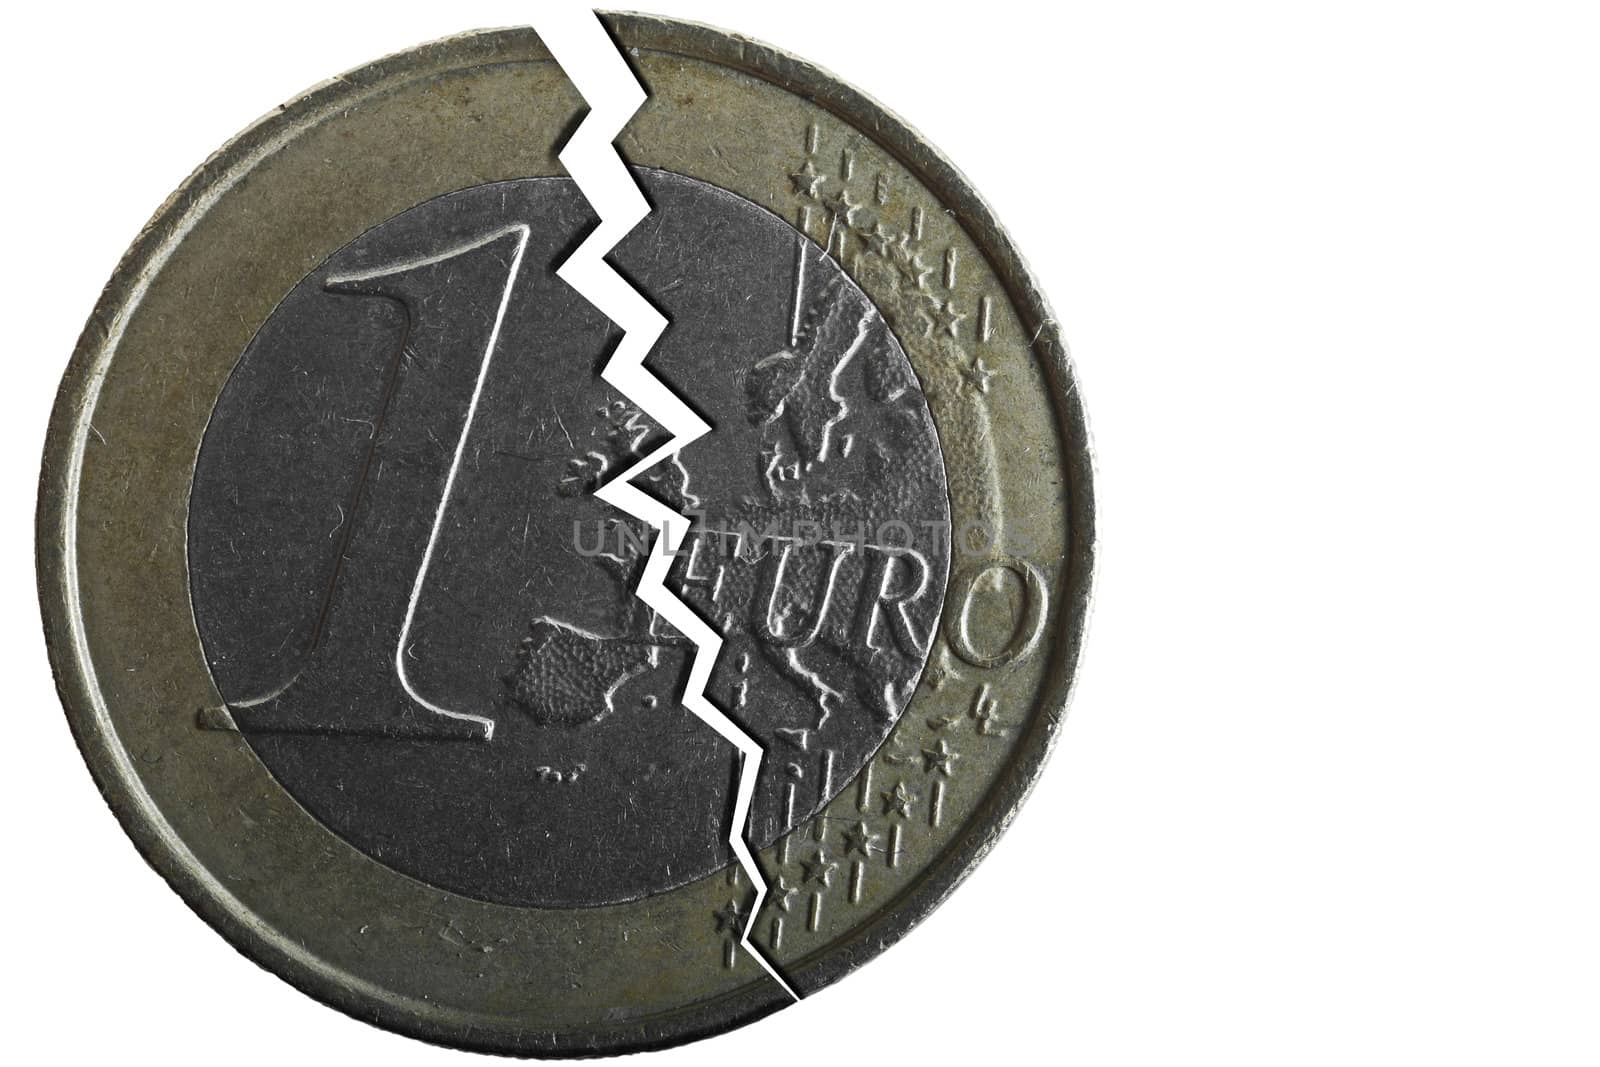 Conceptual image showing a cracked 1 Euro coin